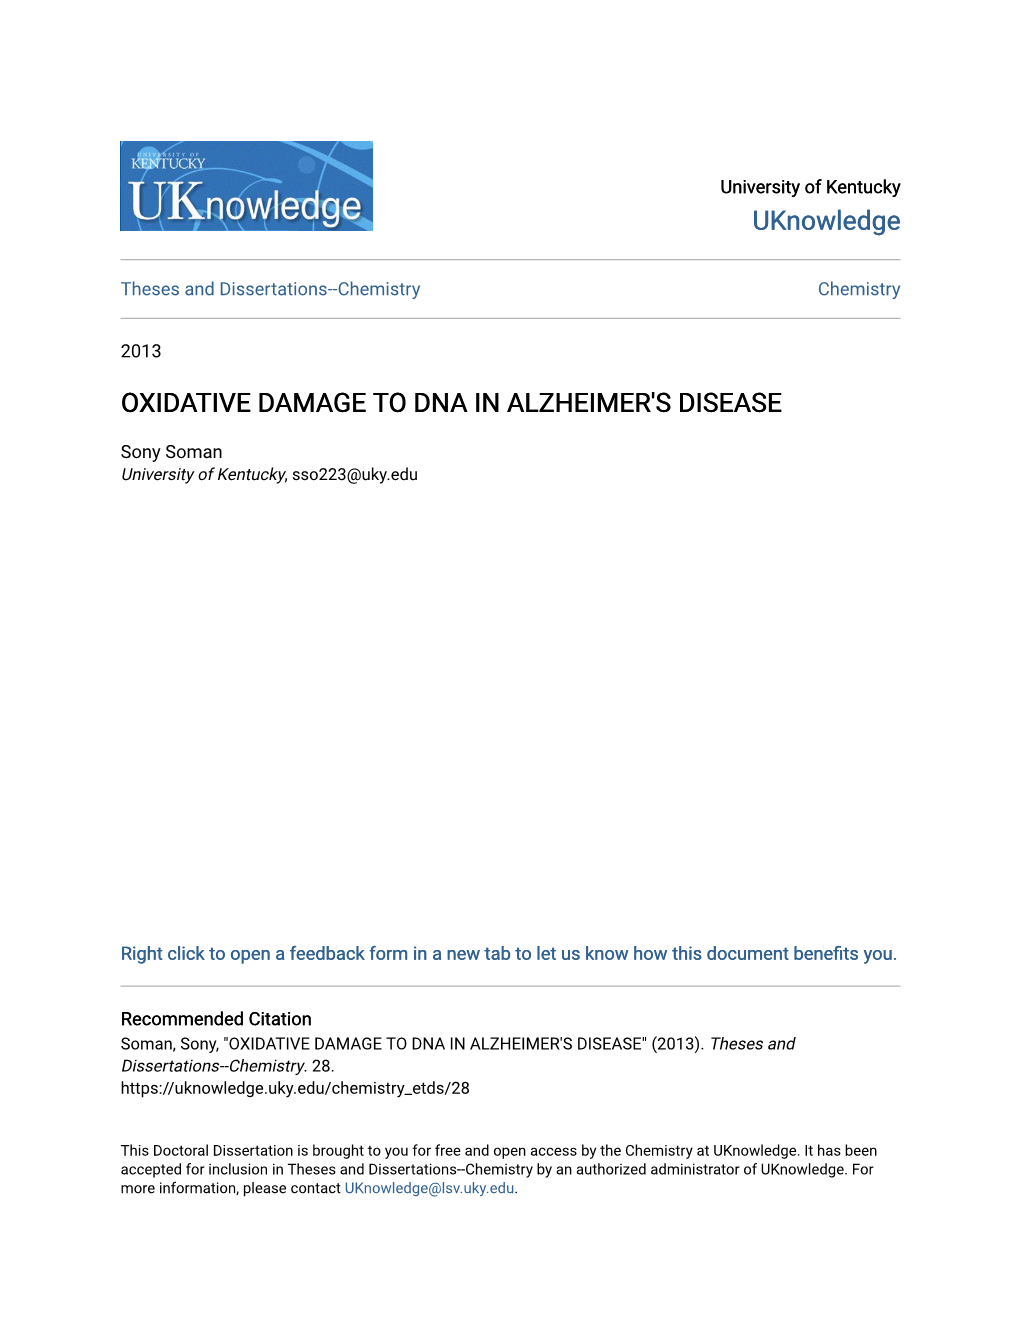 Oxidative Damage to Dna in Alzheimer's Disease